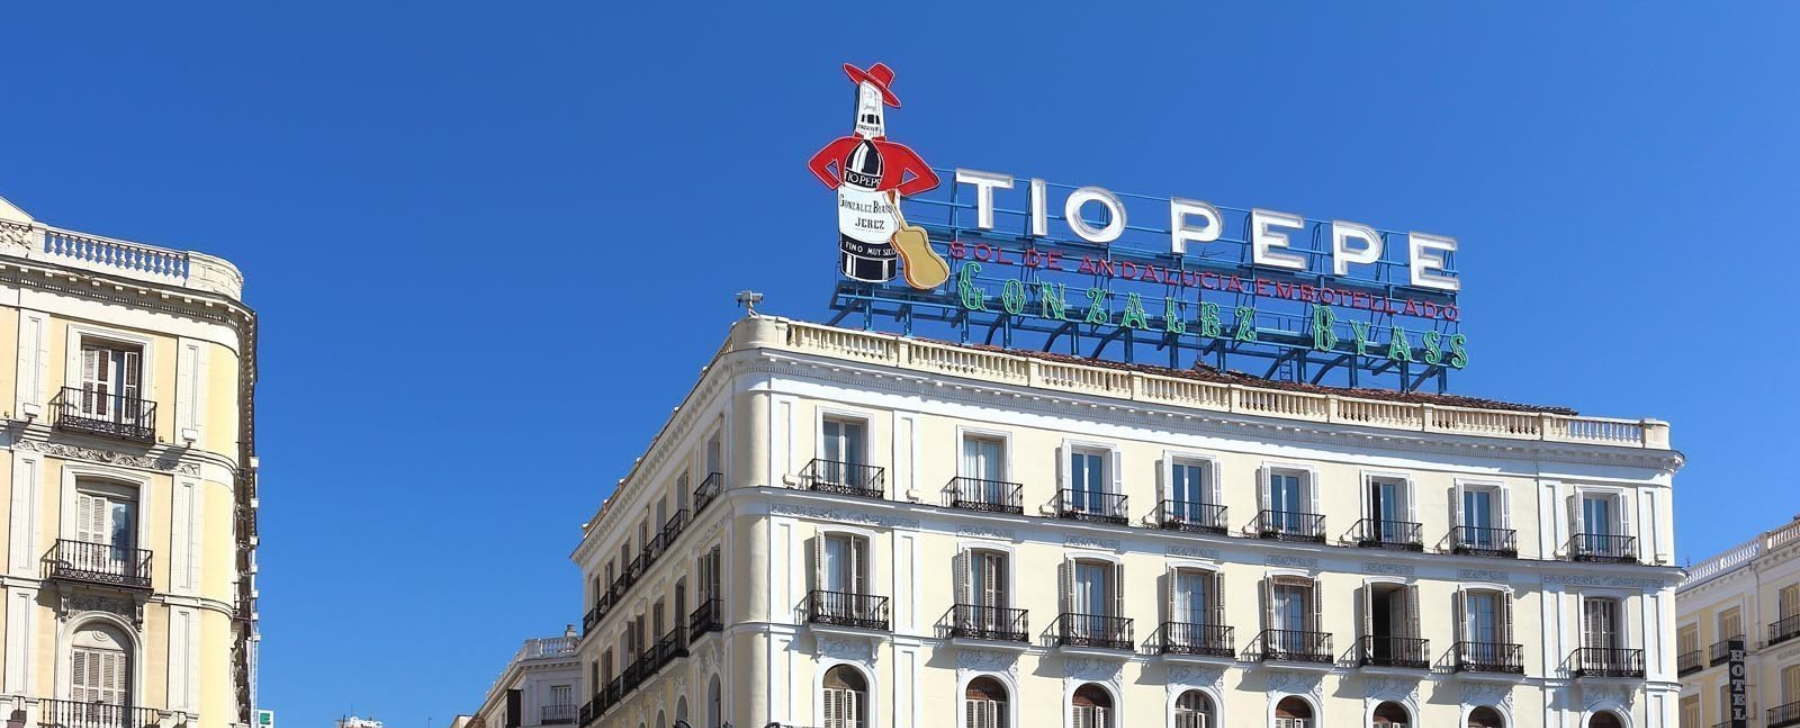 El cartel del Tío Pepe ilumina Madrid